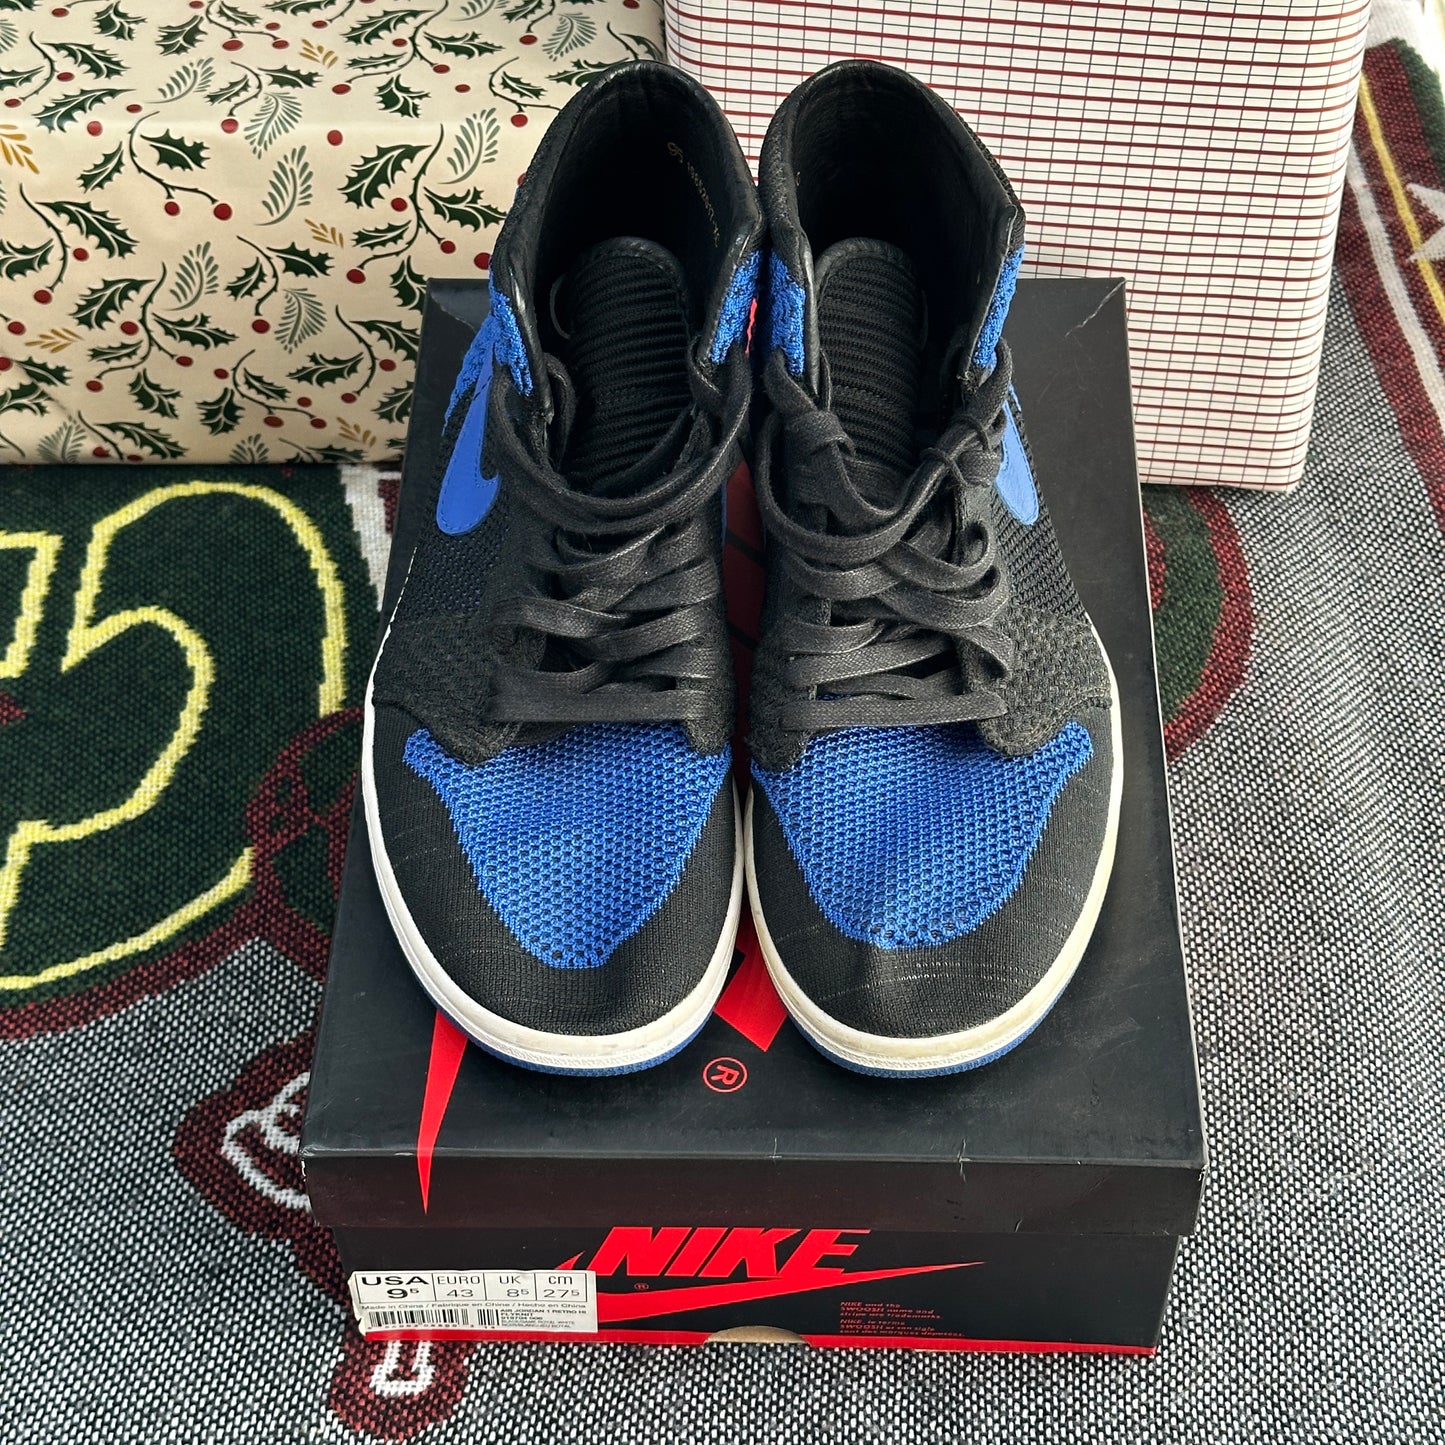 Nike Air Jordan 1 Retro High Flyknit Royal blue Shoes